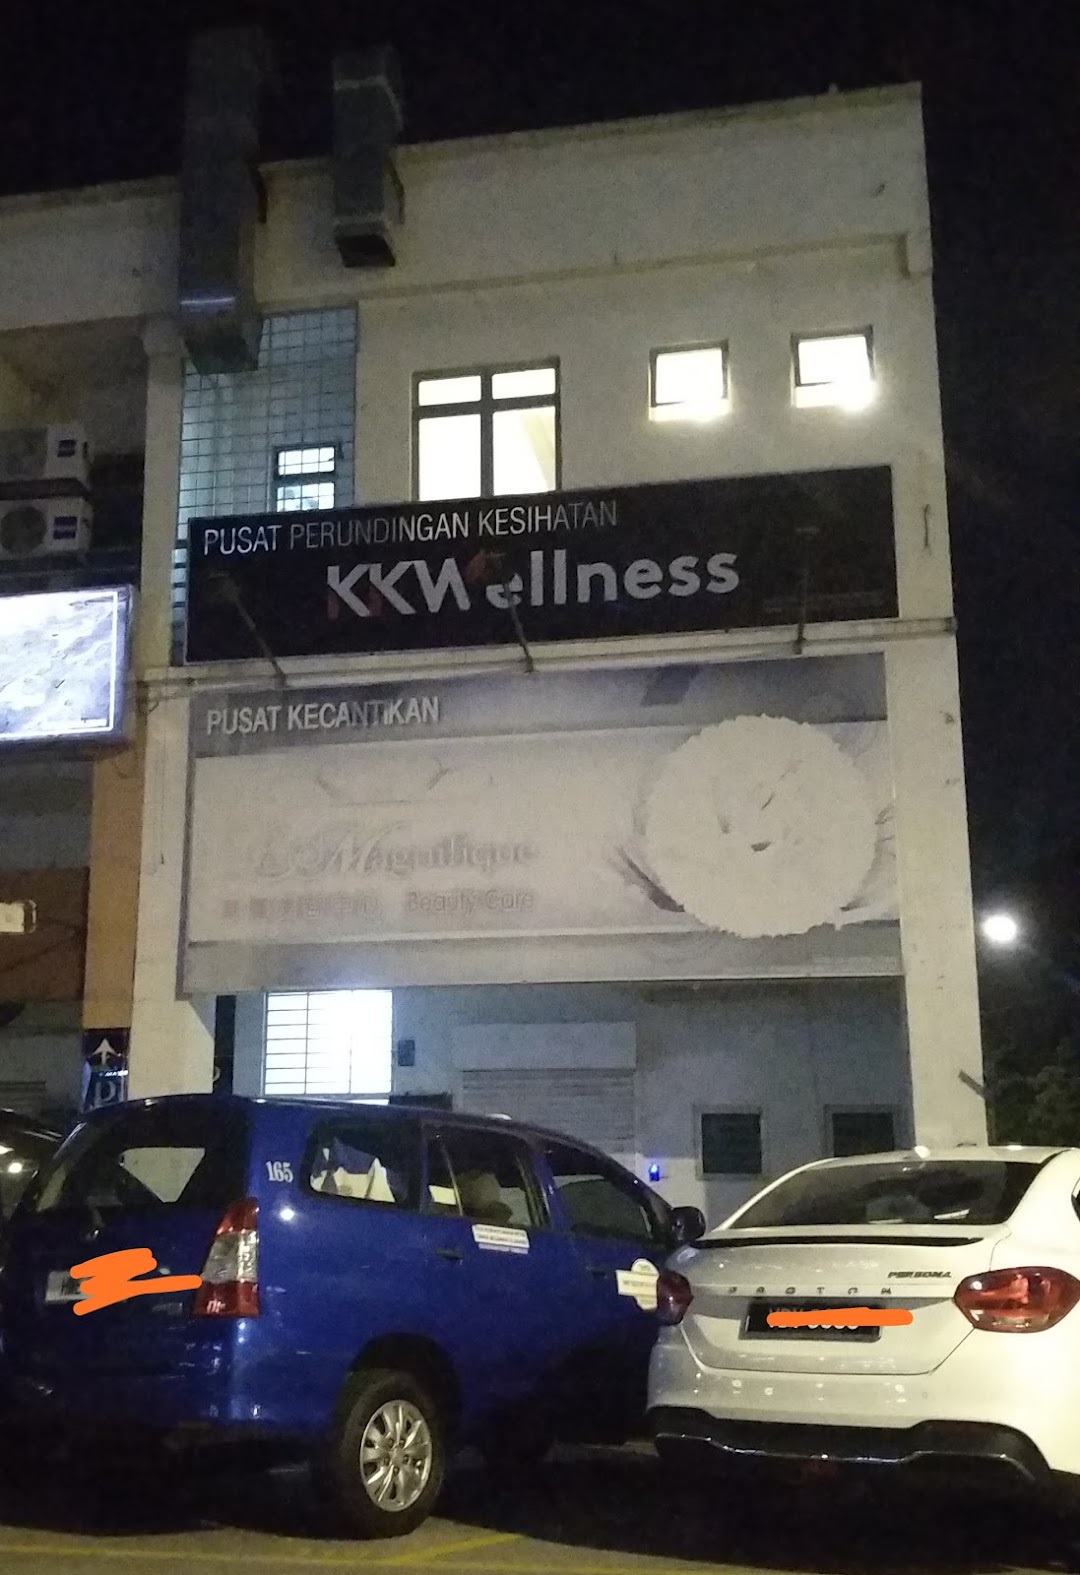 KKW Wellness